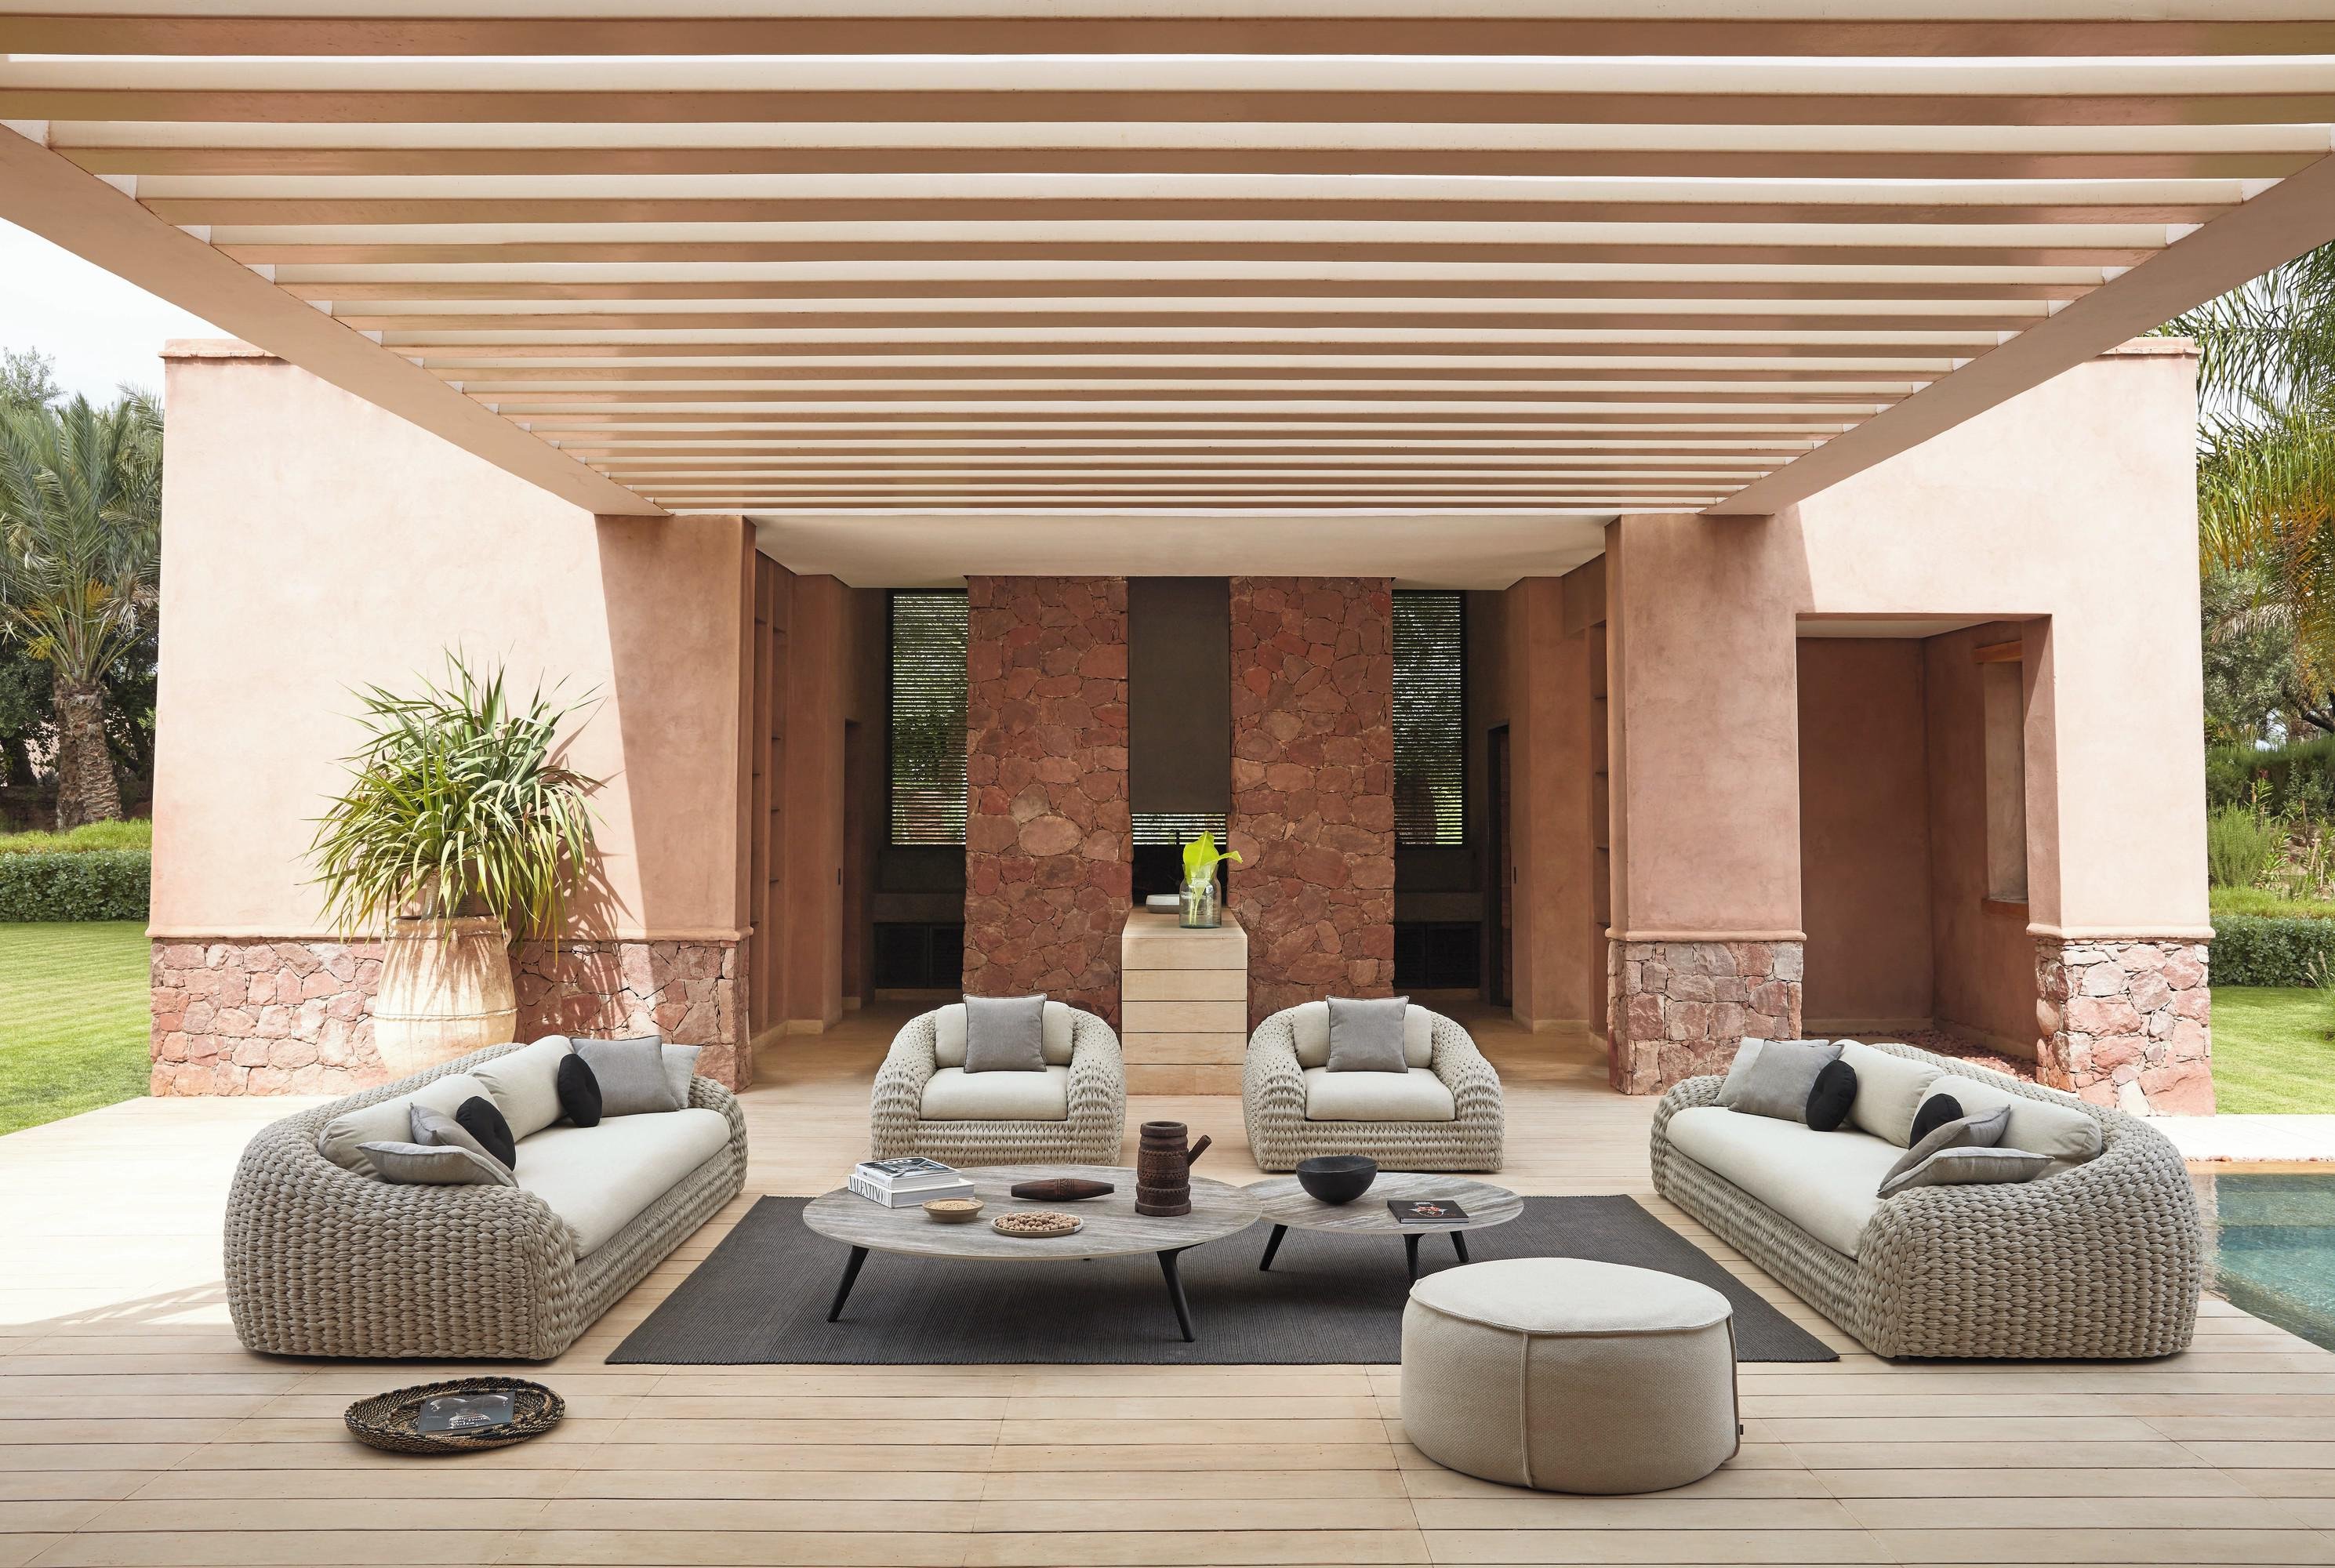 Kobo Sofa from Manutti, designed by Stephane De Winter